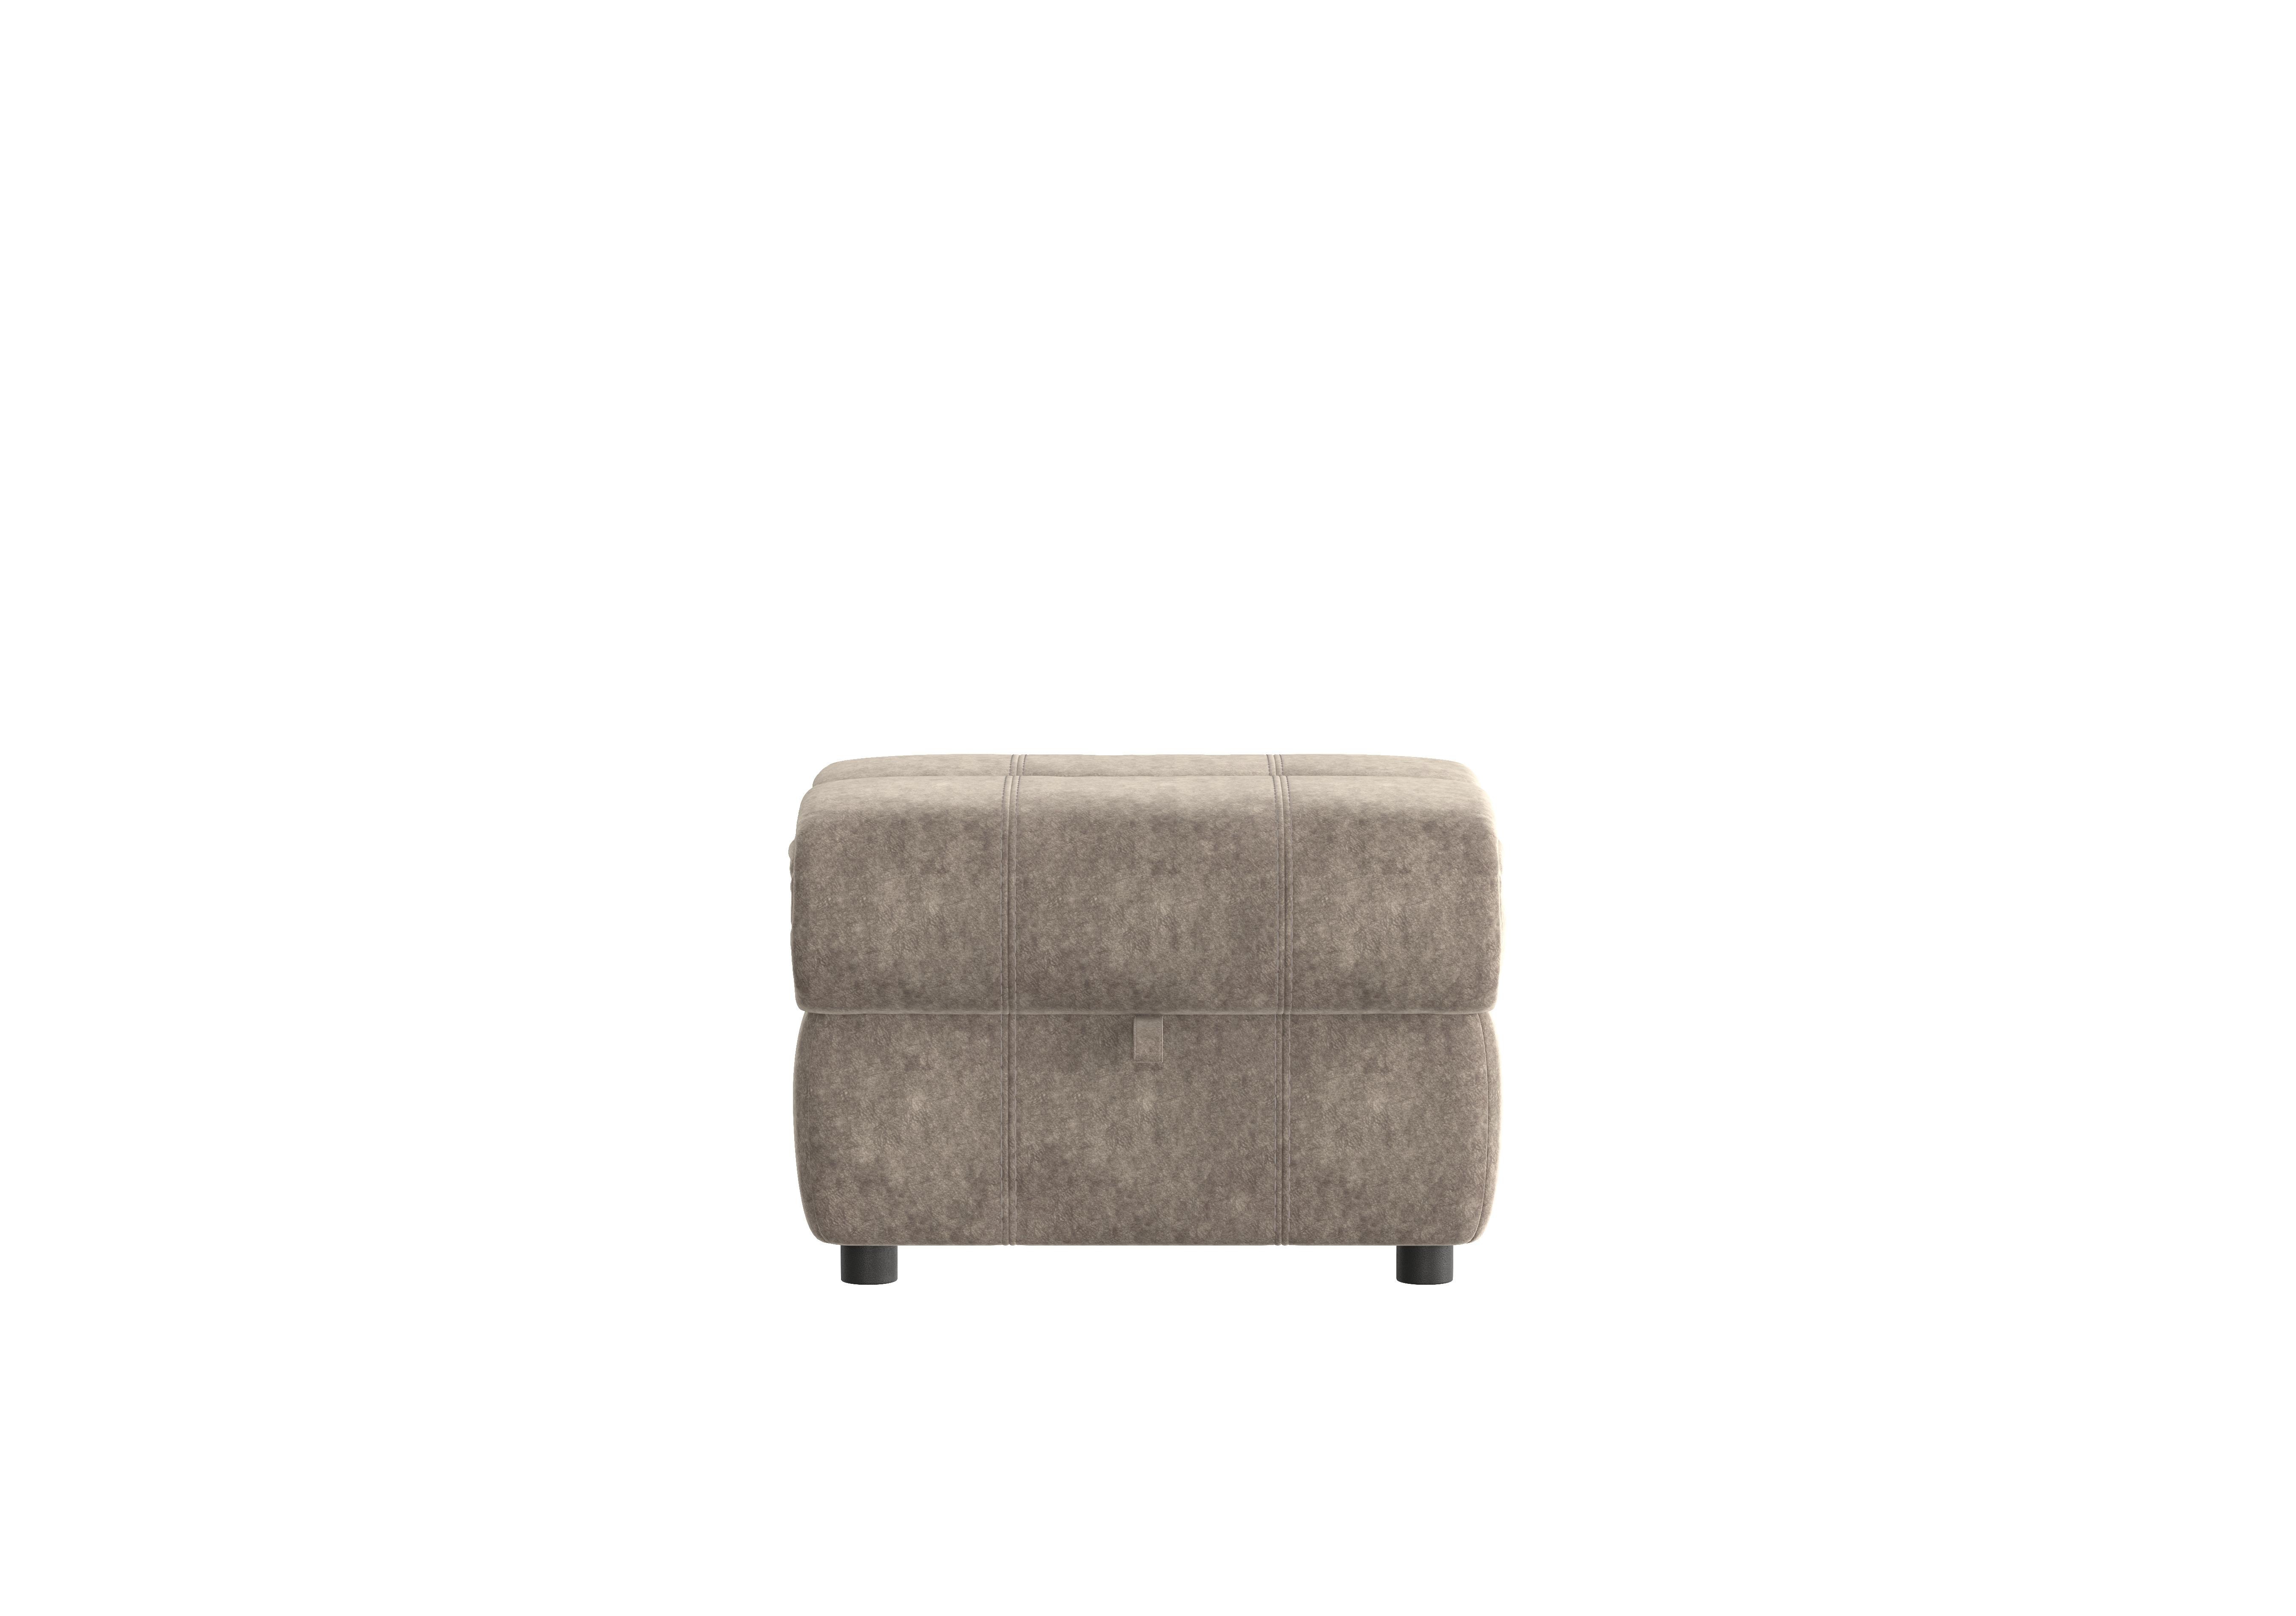 Link Fabric Footstool in Bfa-Bnn-R29 Fv1 Mink on Furniture Village